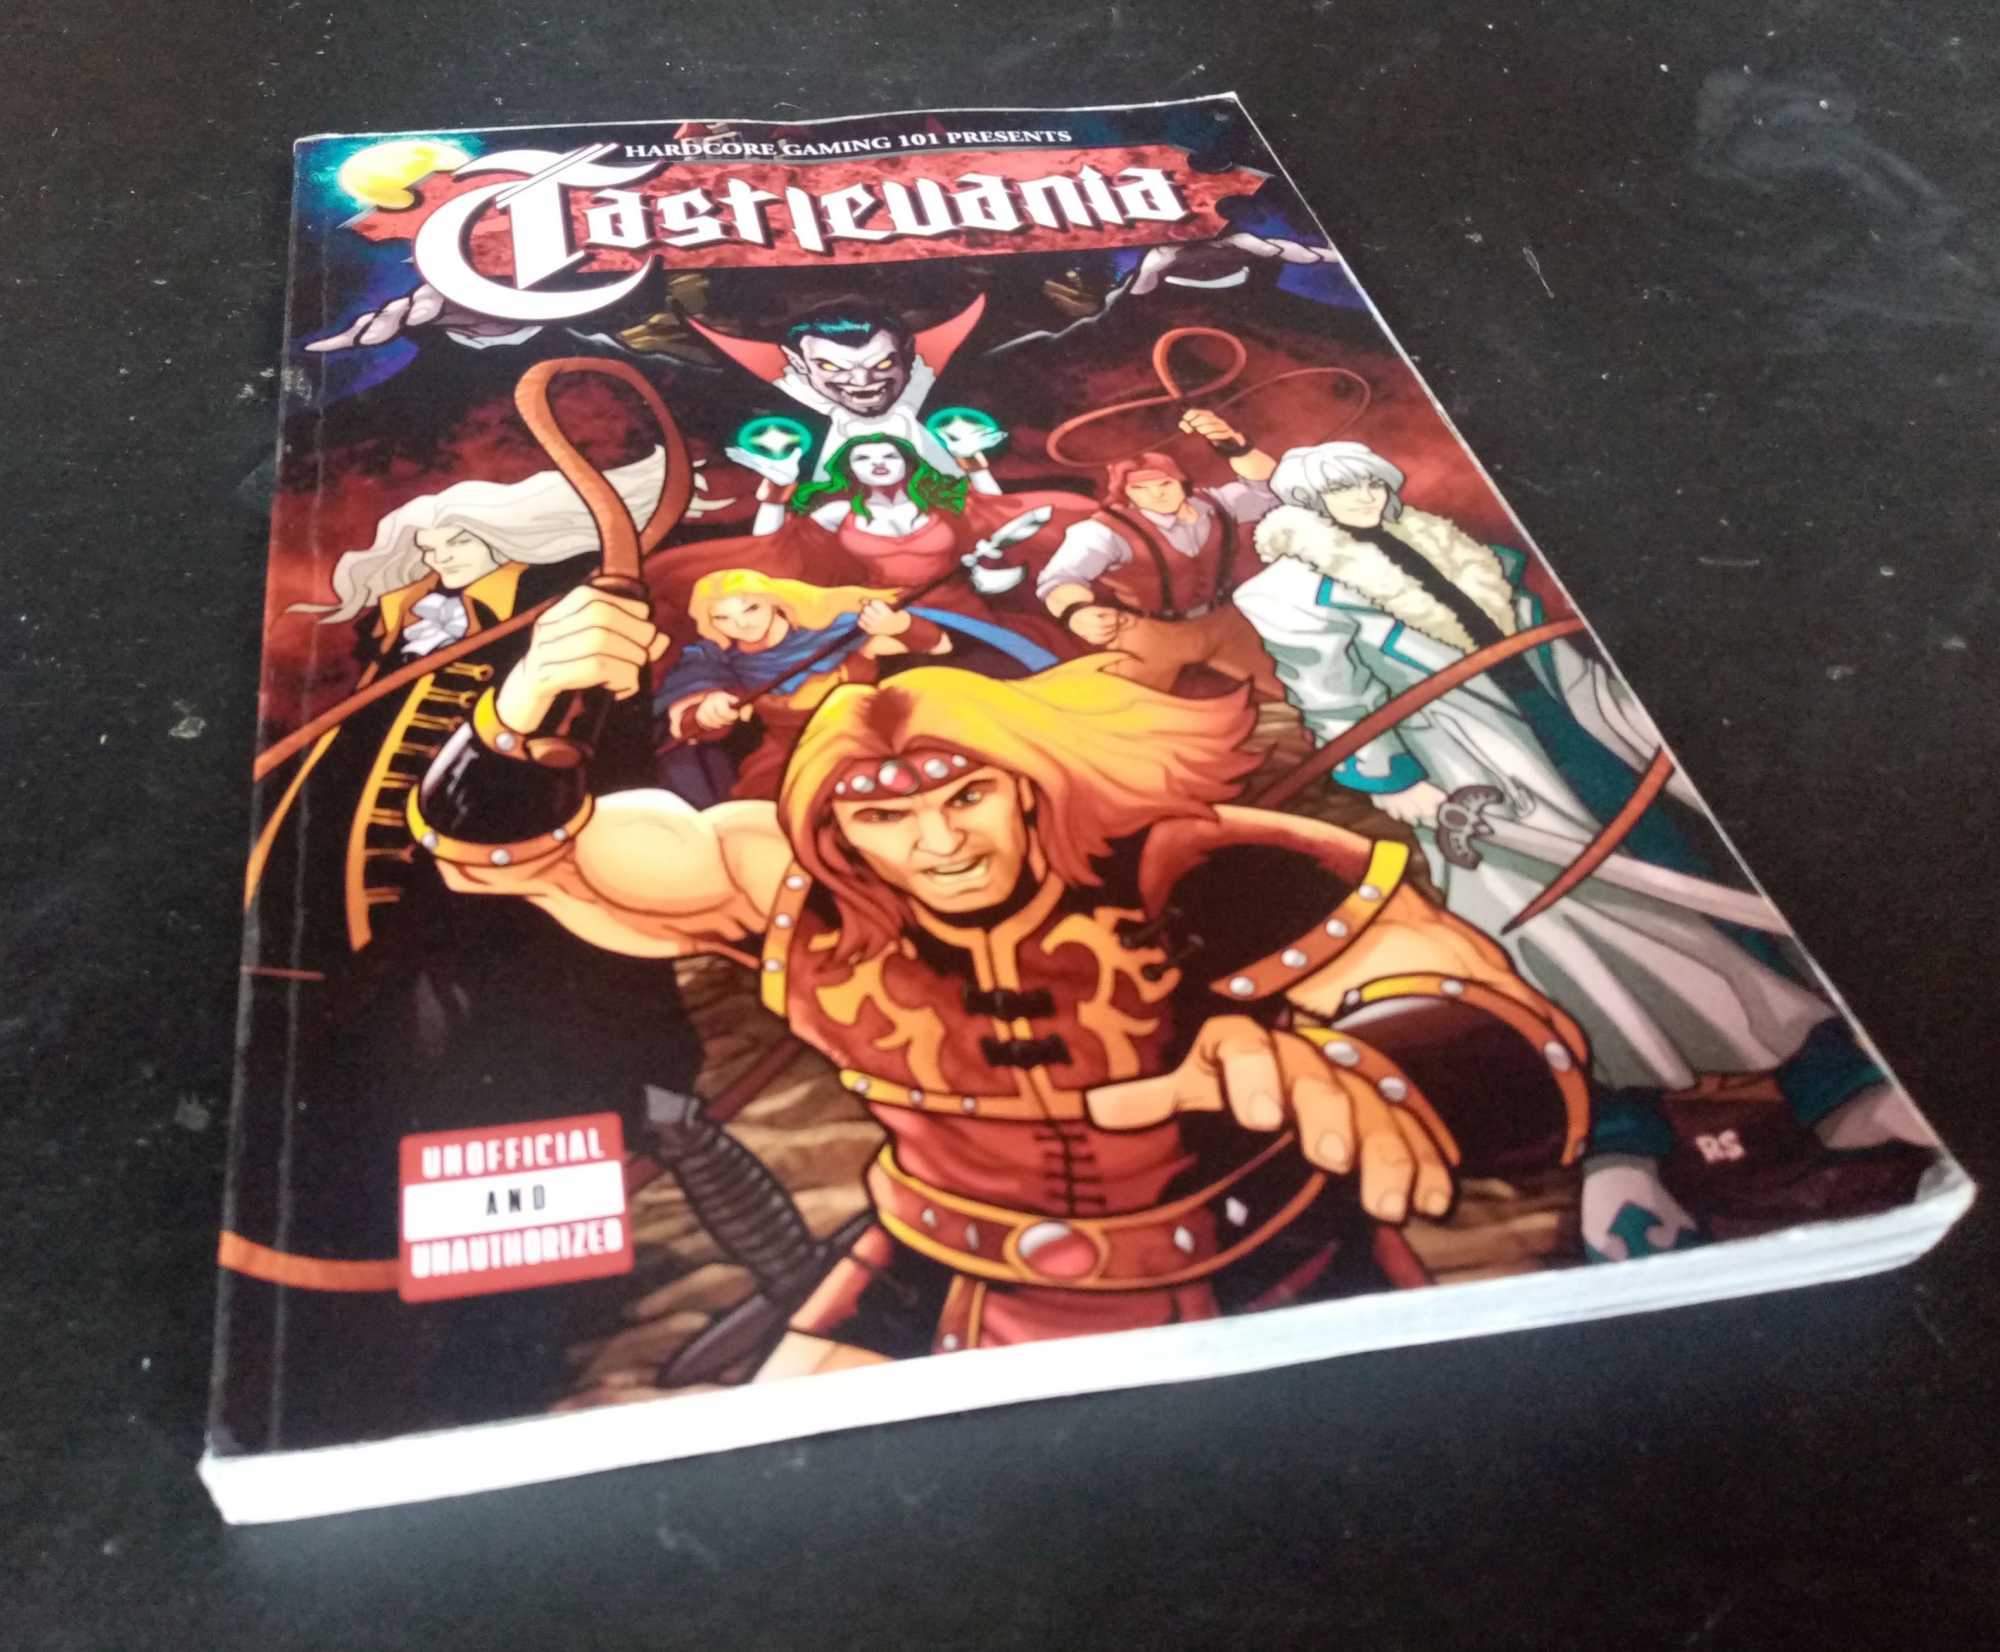 Kurt Kalata, ed. - Hardcore Gaming 101 Presents: Castlevania (Color Edition)